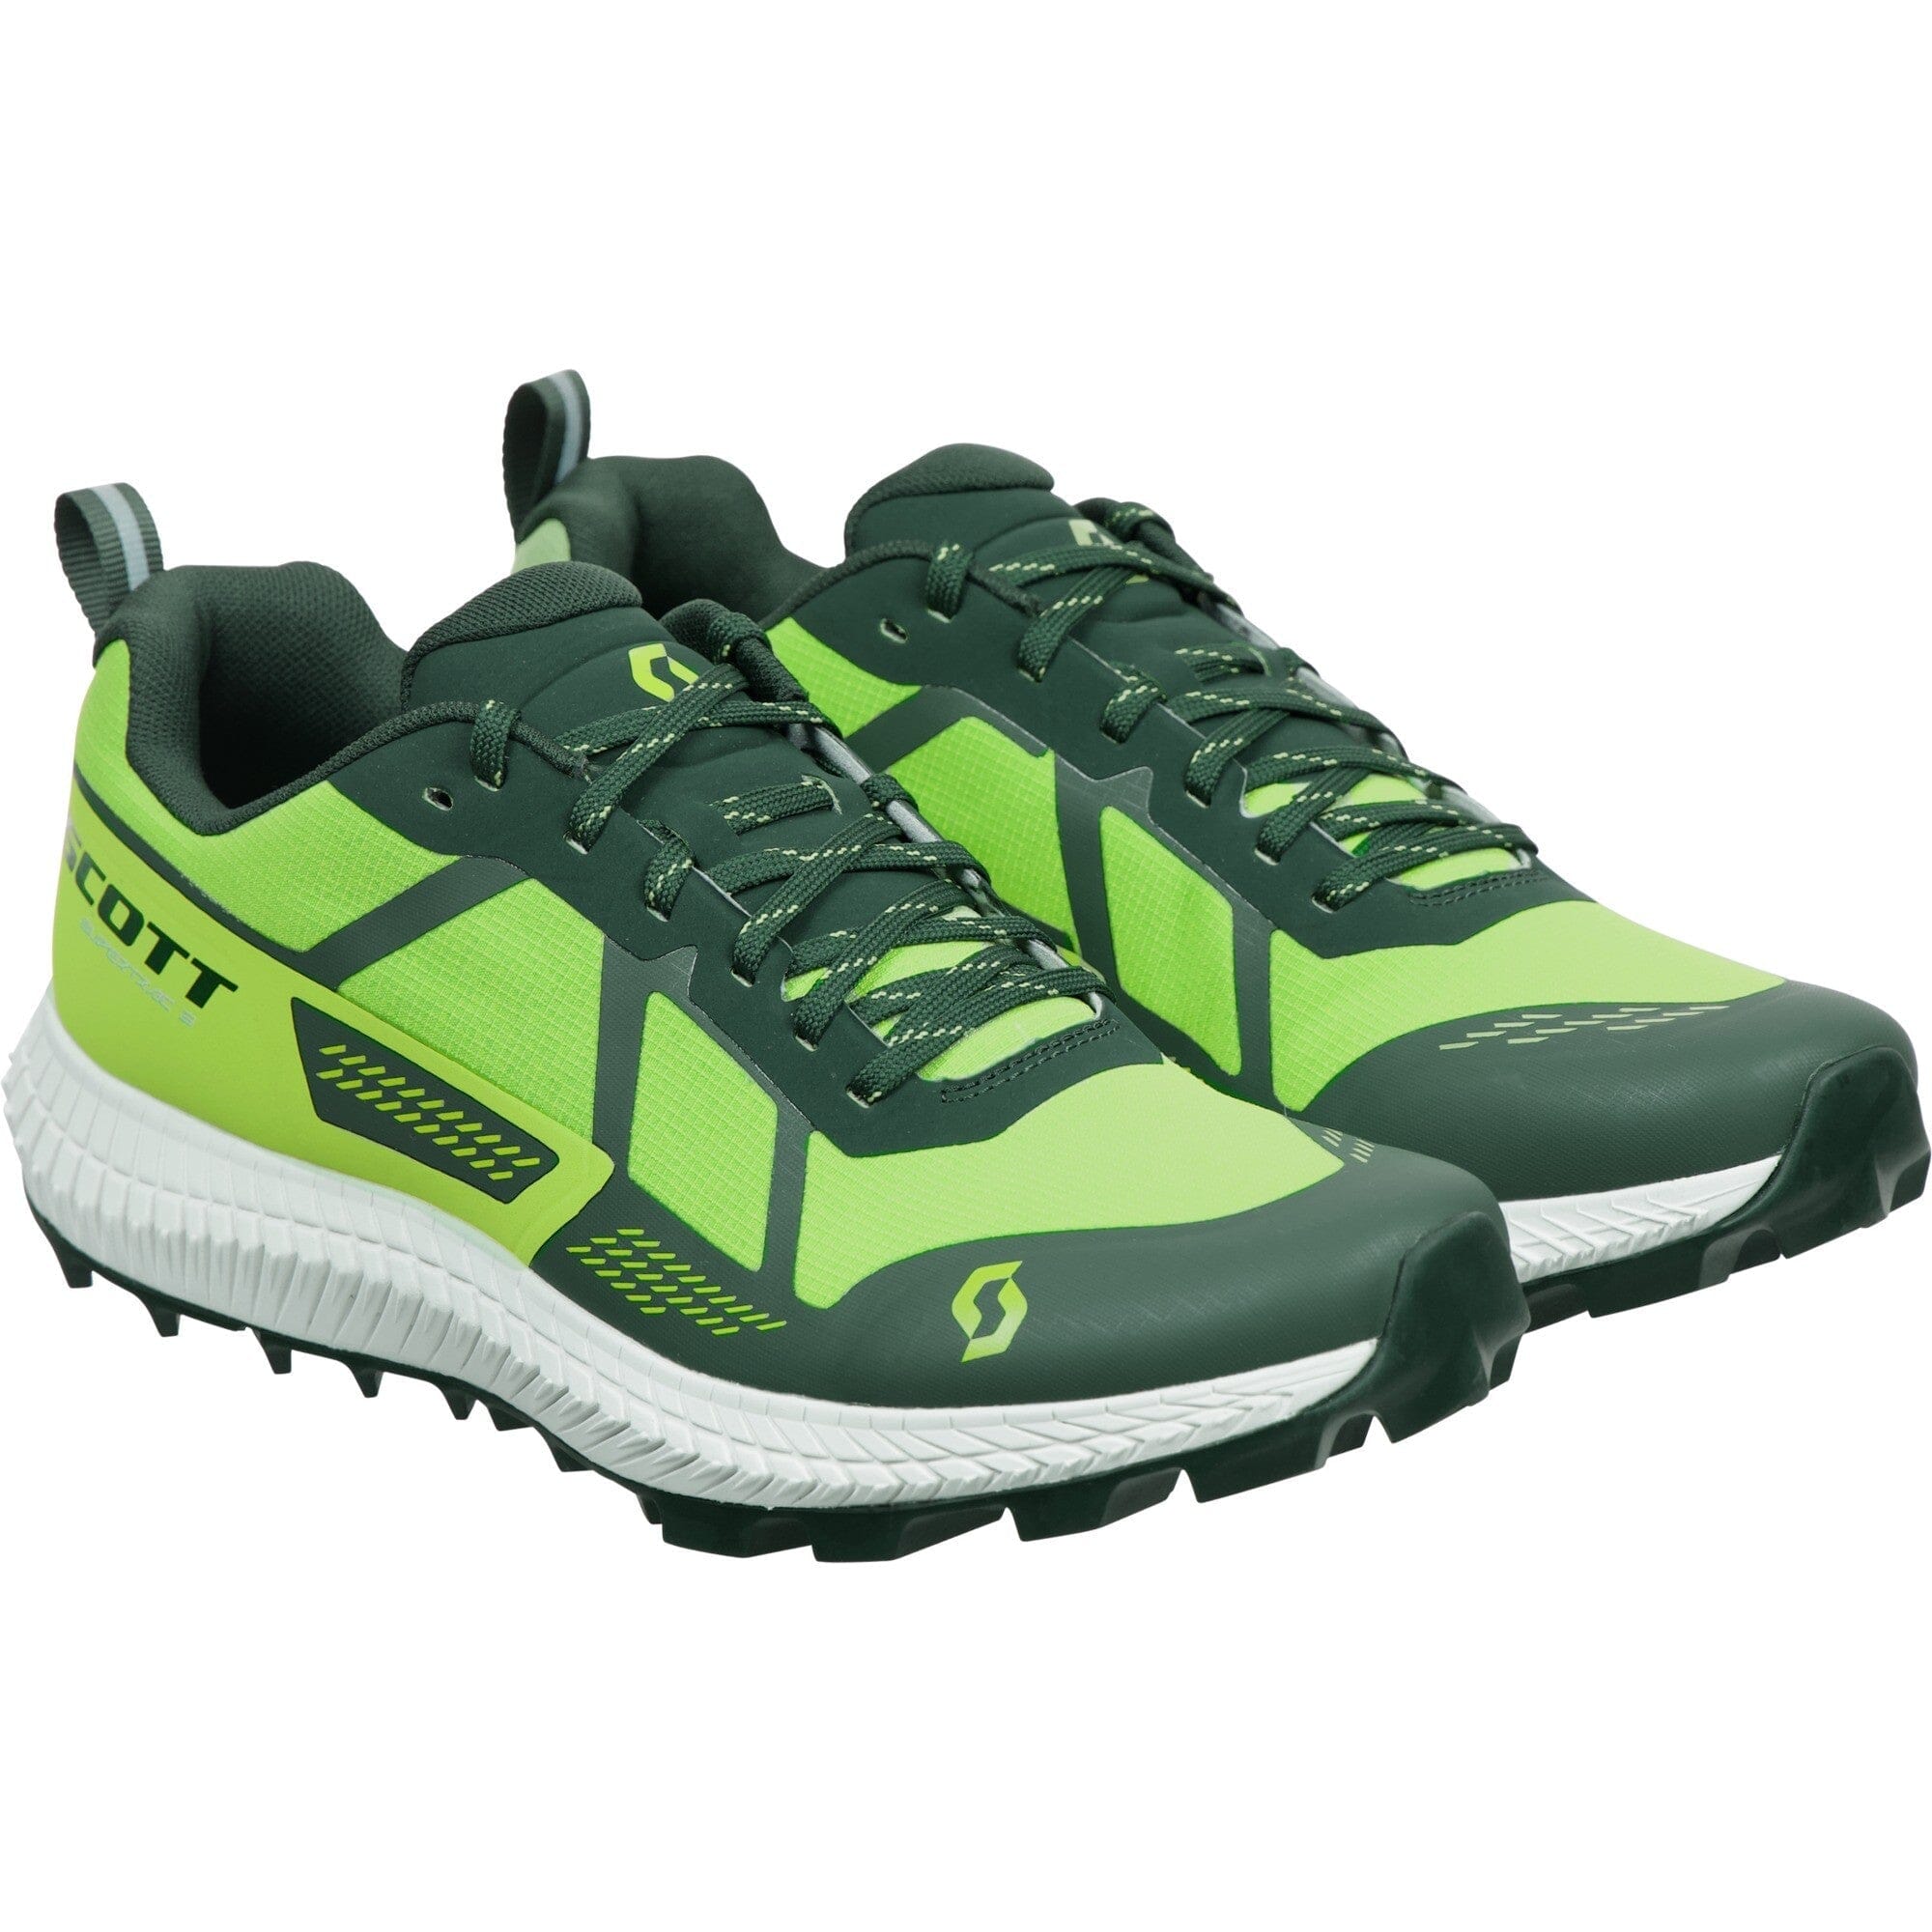 Scott Men's Supertrac 3 Trail Running Shoes jasmine green/smoked green US 9 